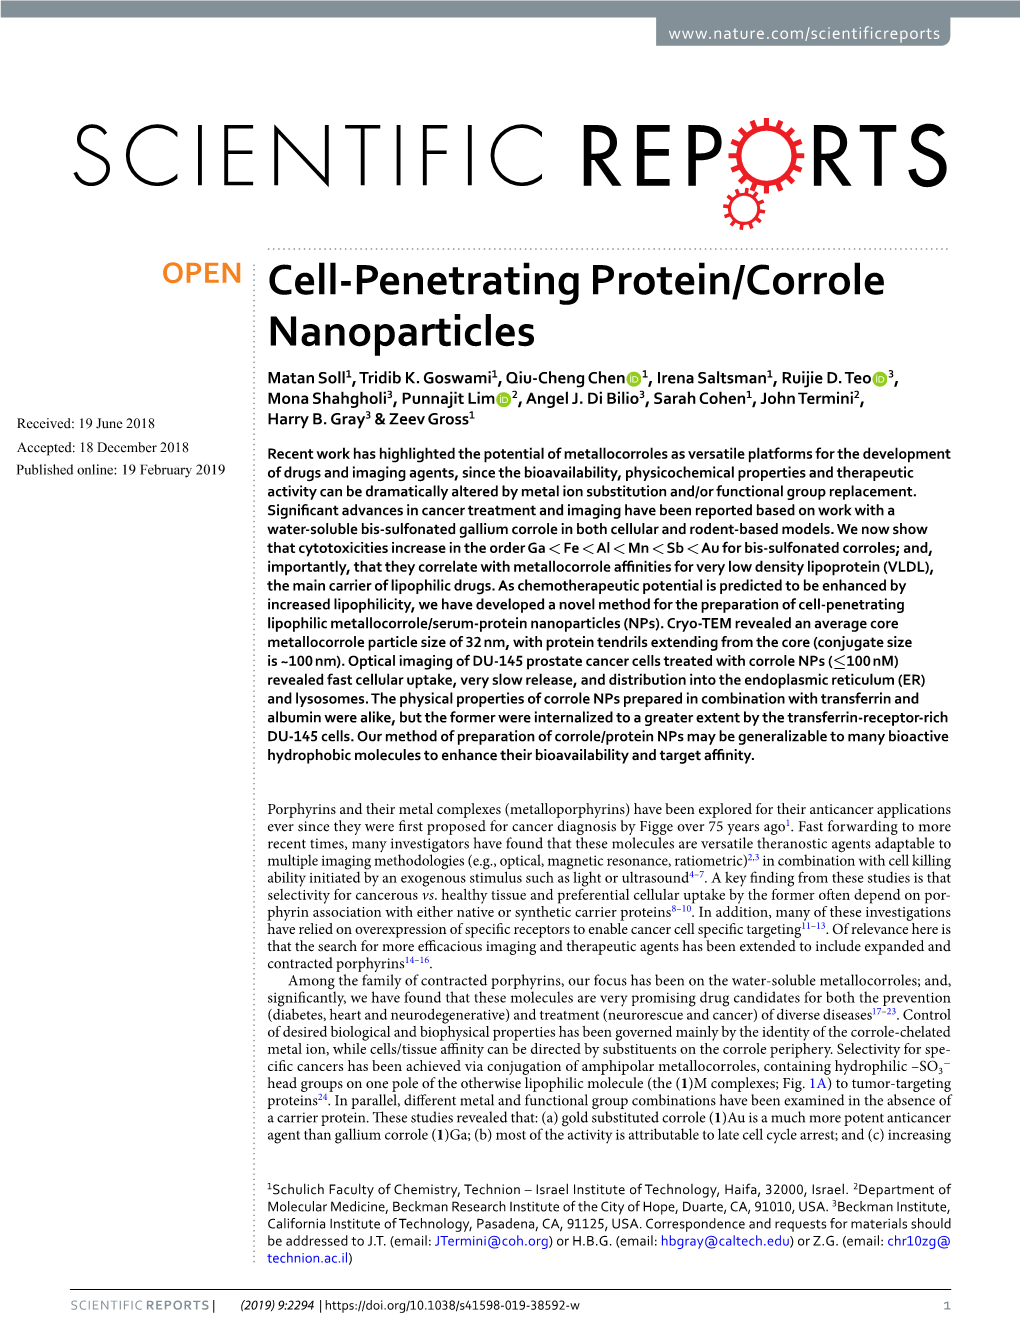 Cell-Penetrating Protein/Corrole Nanoparticles Matan Soll1, Tridib K